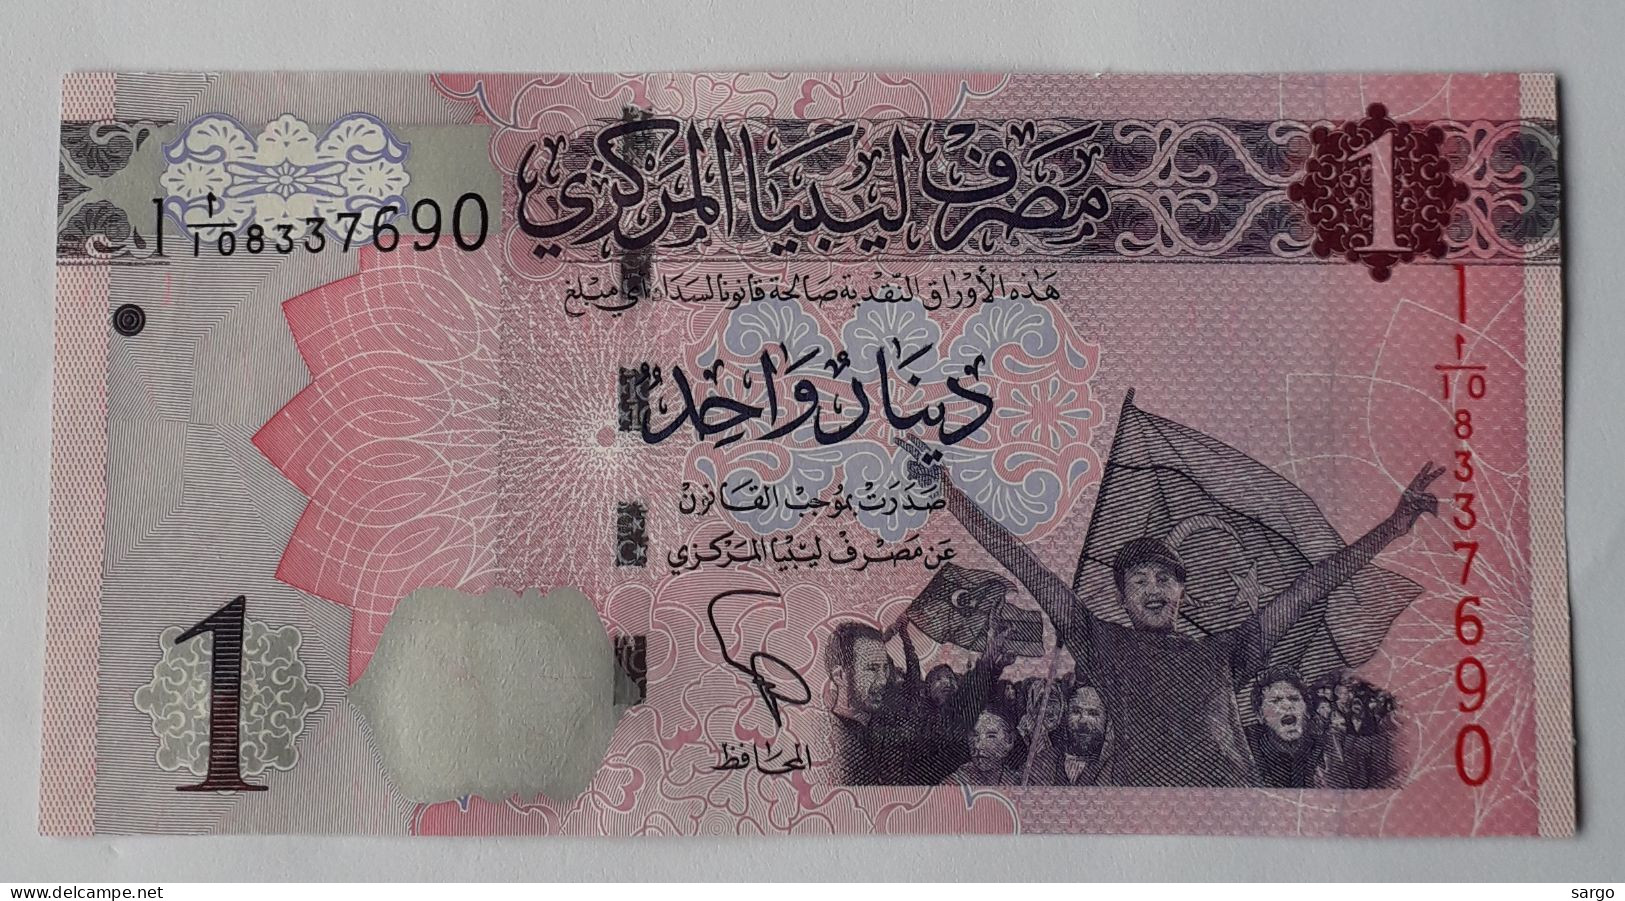 LIBYA - 1 DINAR - 2013 -  P 76  - UNC - BANKNOTES - PAPER MONEY - CARTAMONETA - - Libië